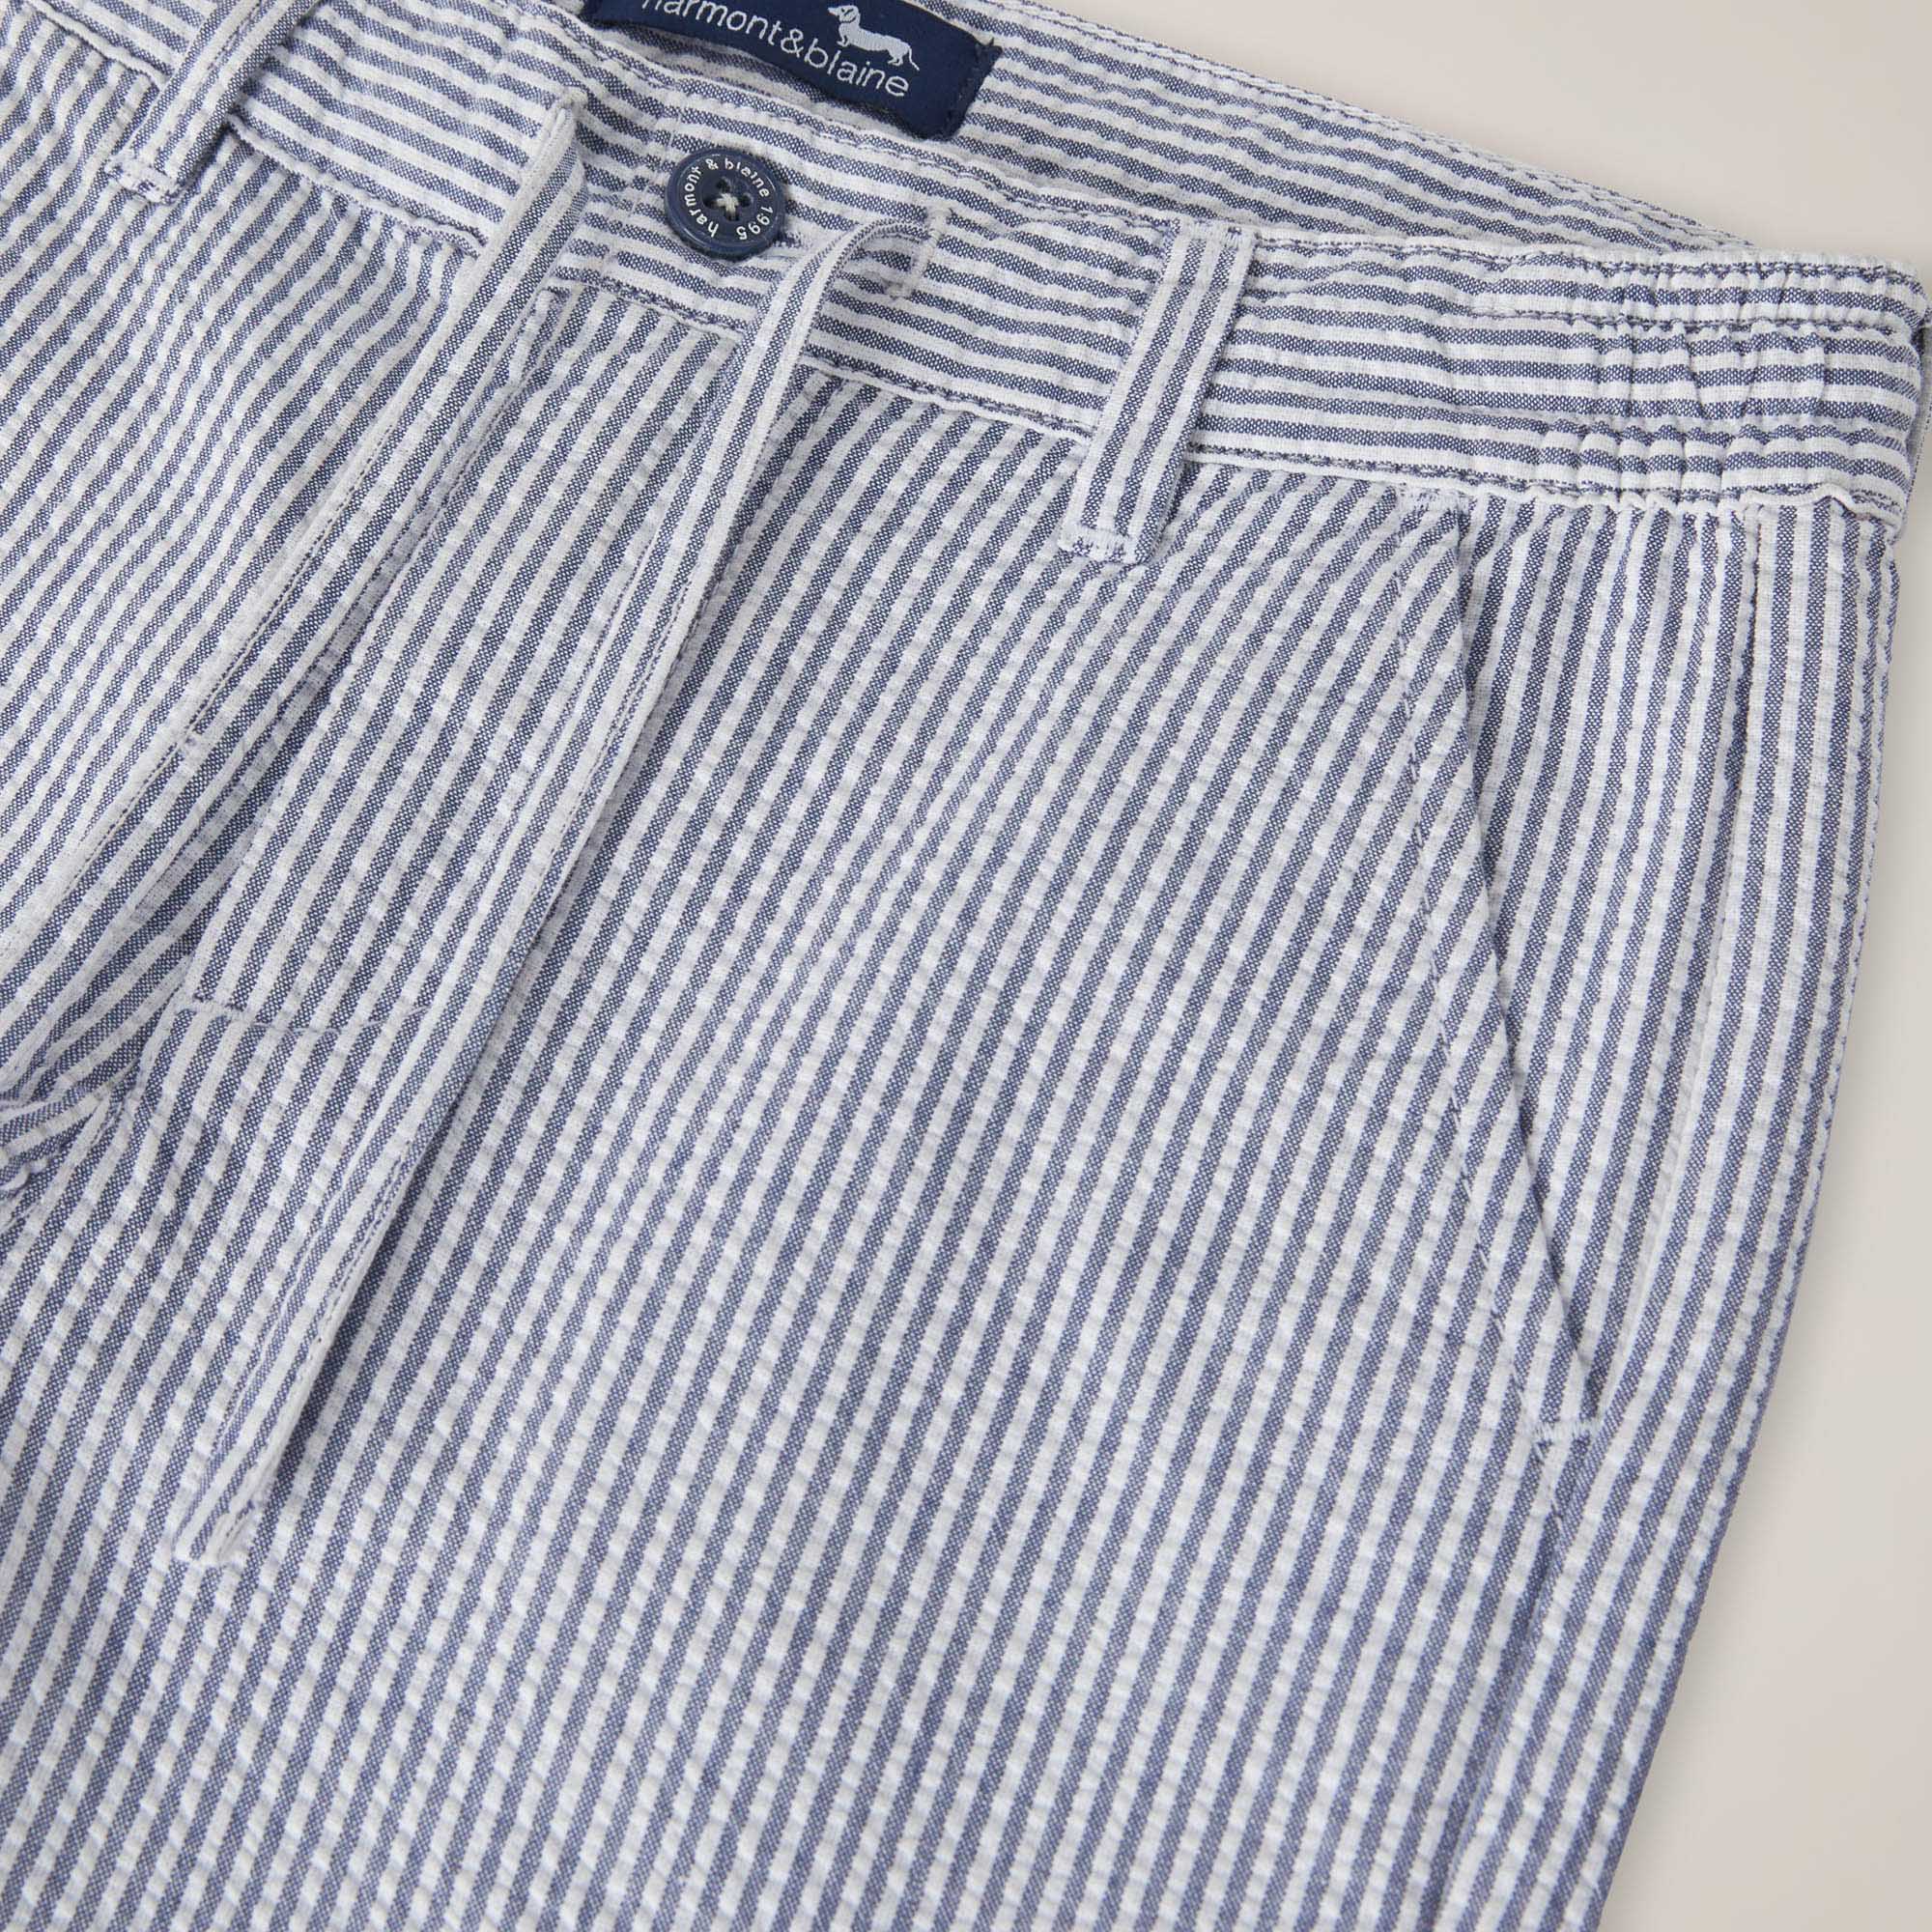 Pantalone Tasca America Seersucker, Blu Chiaro, large image number 2